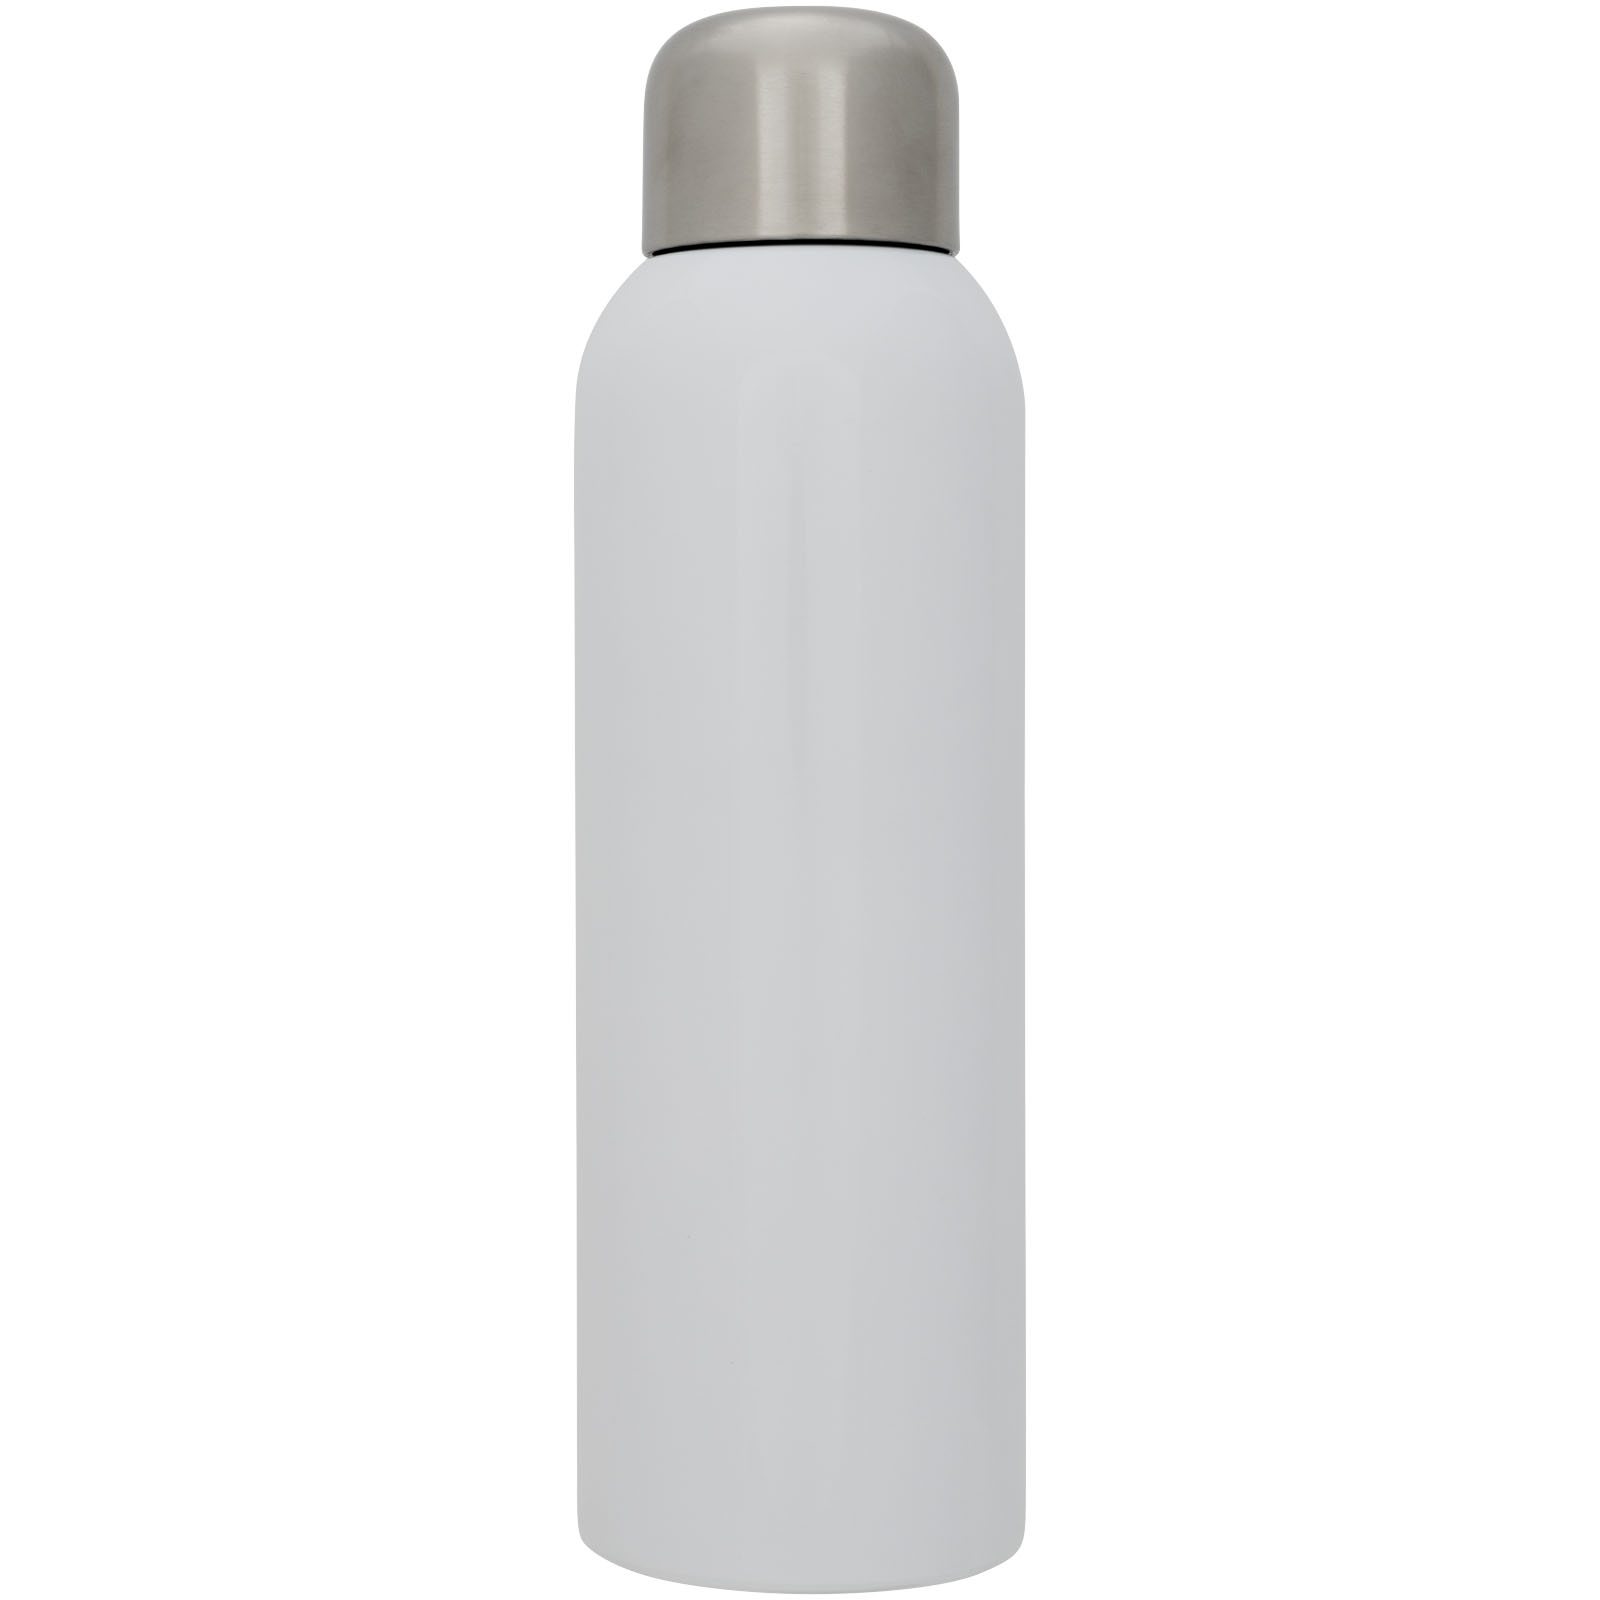 Advertising Water bottles - Guzzle 820 ml RCS certified stainless steel water bottle - 1